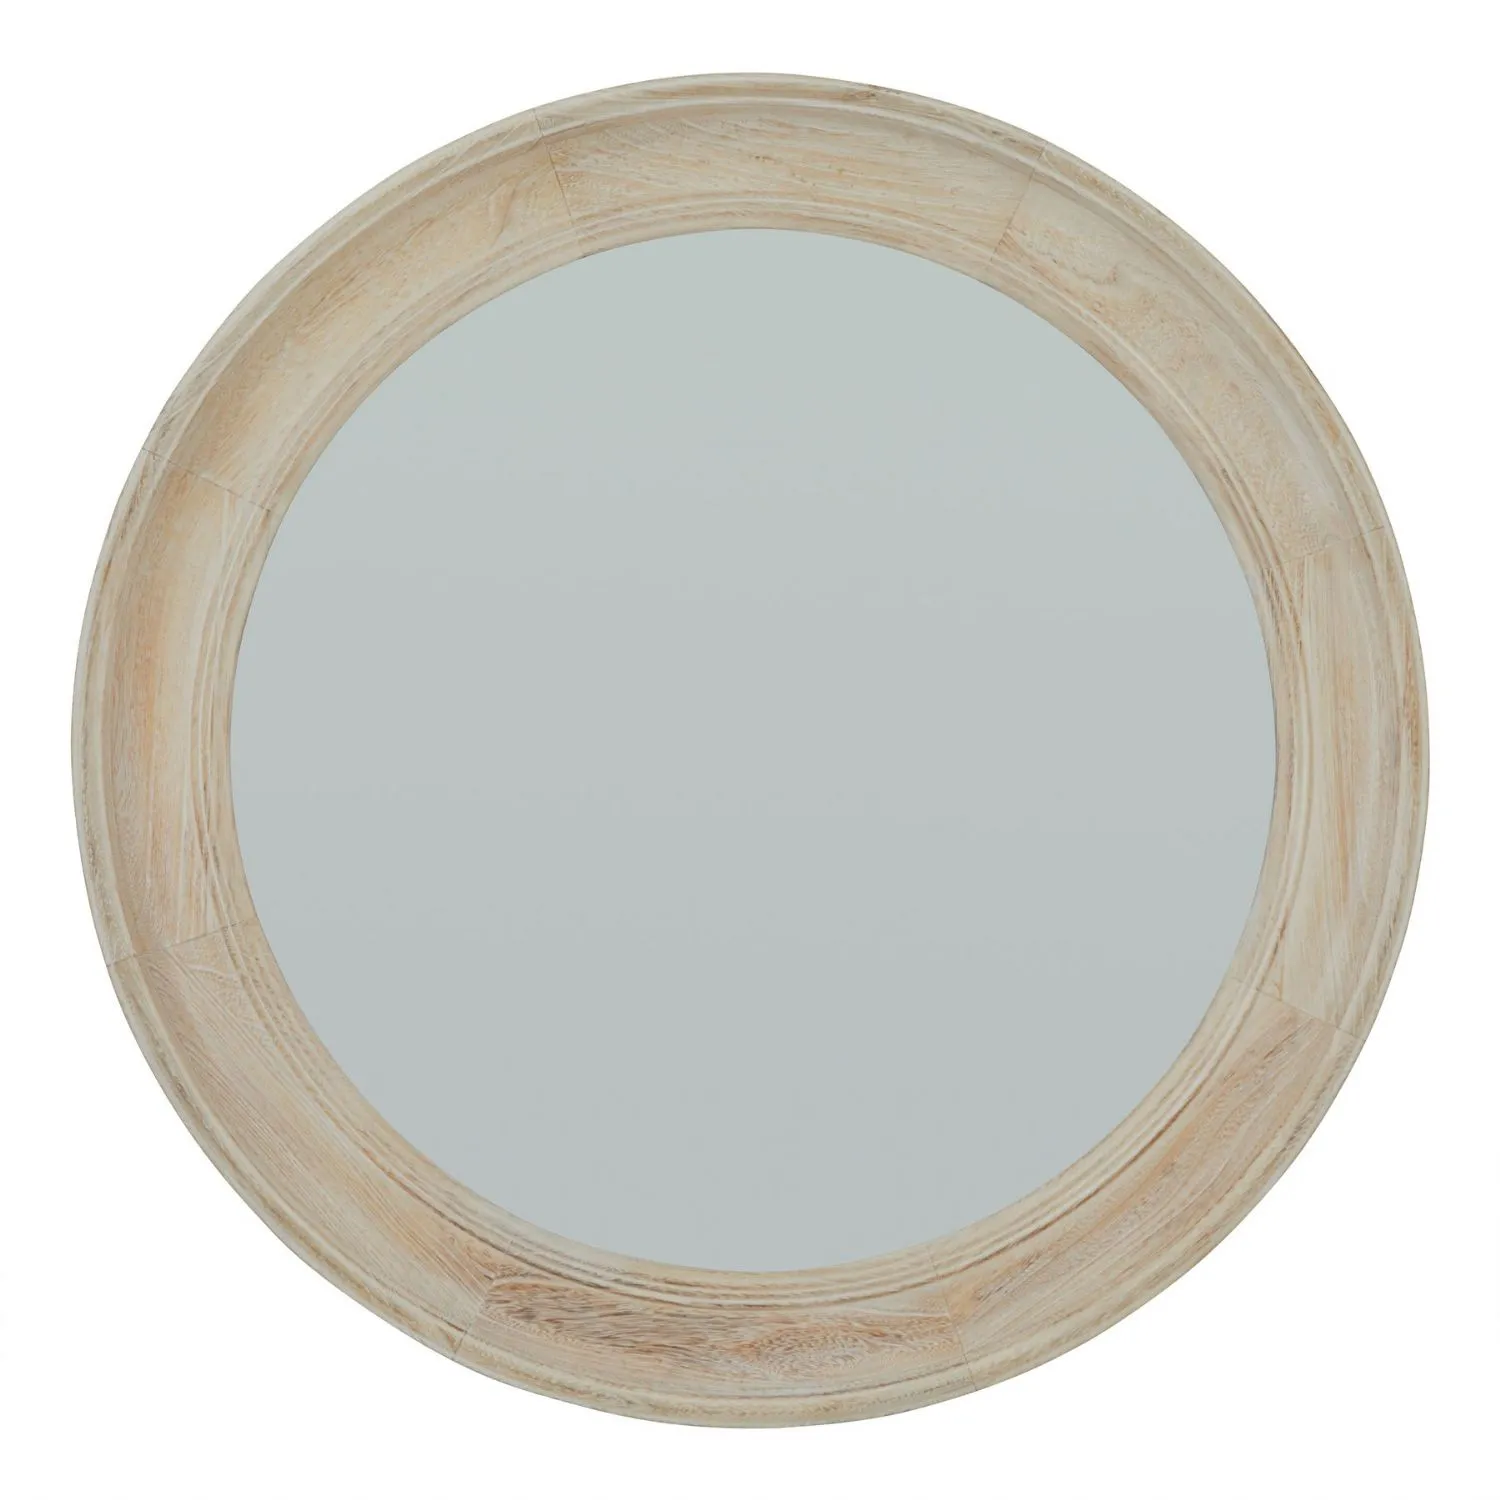 Washed Wood Round Framed Mirror